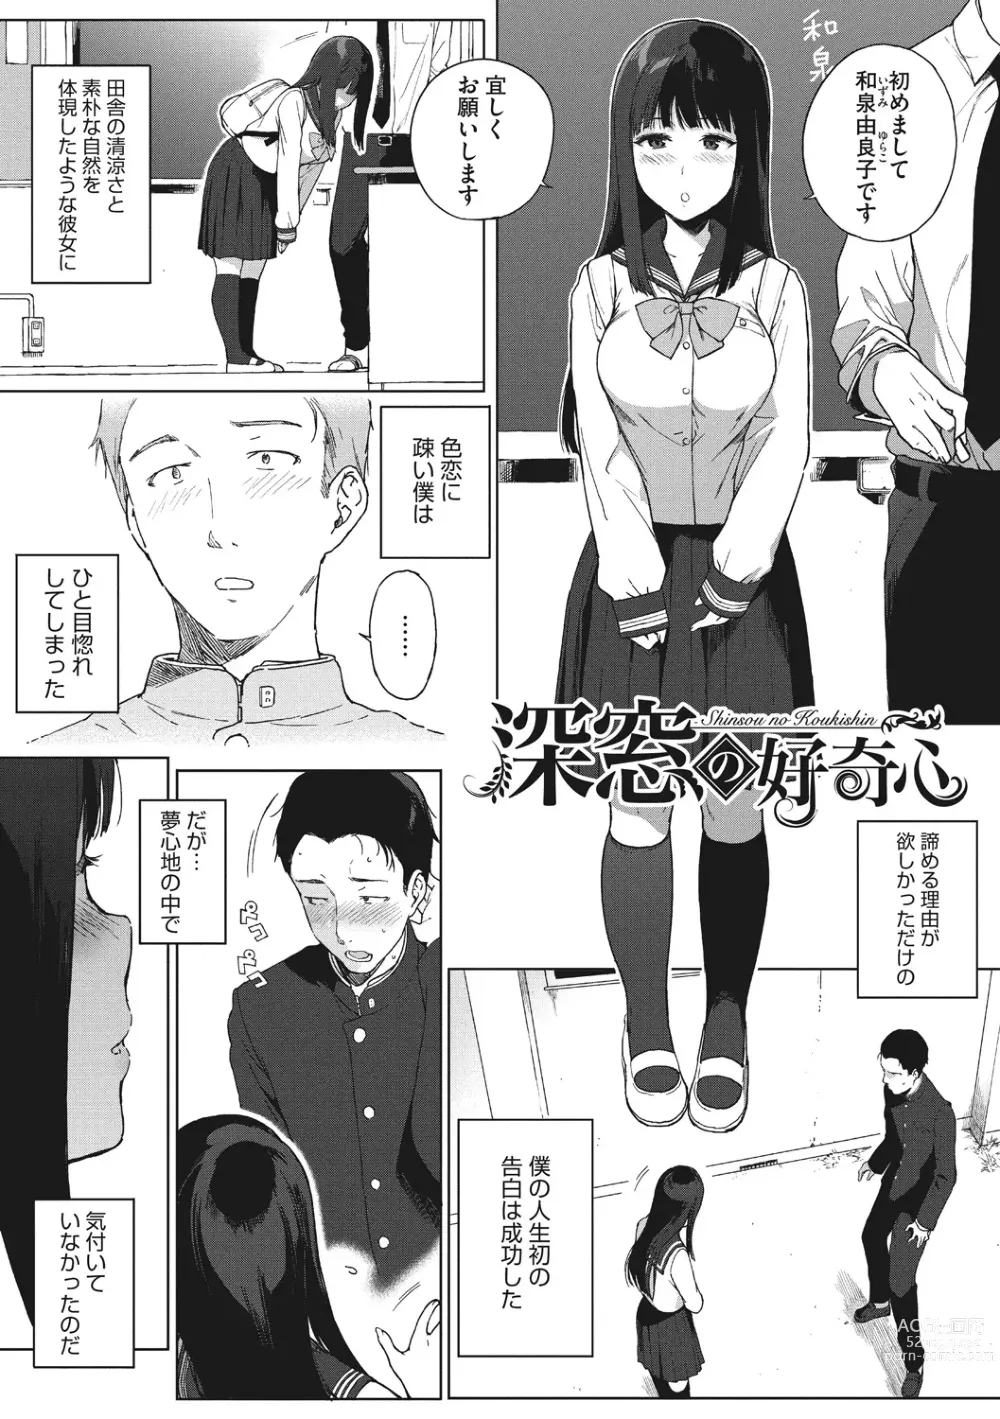 Page 7 of manga Houkago no Yuutousei